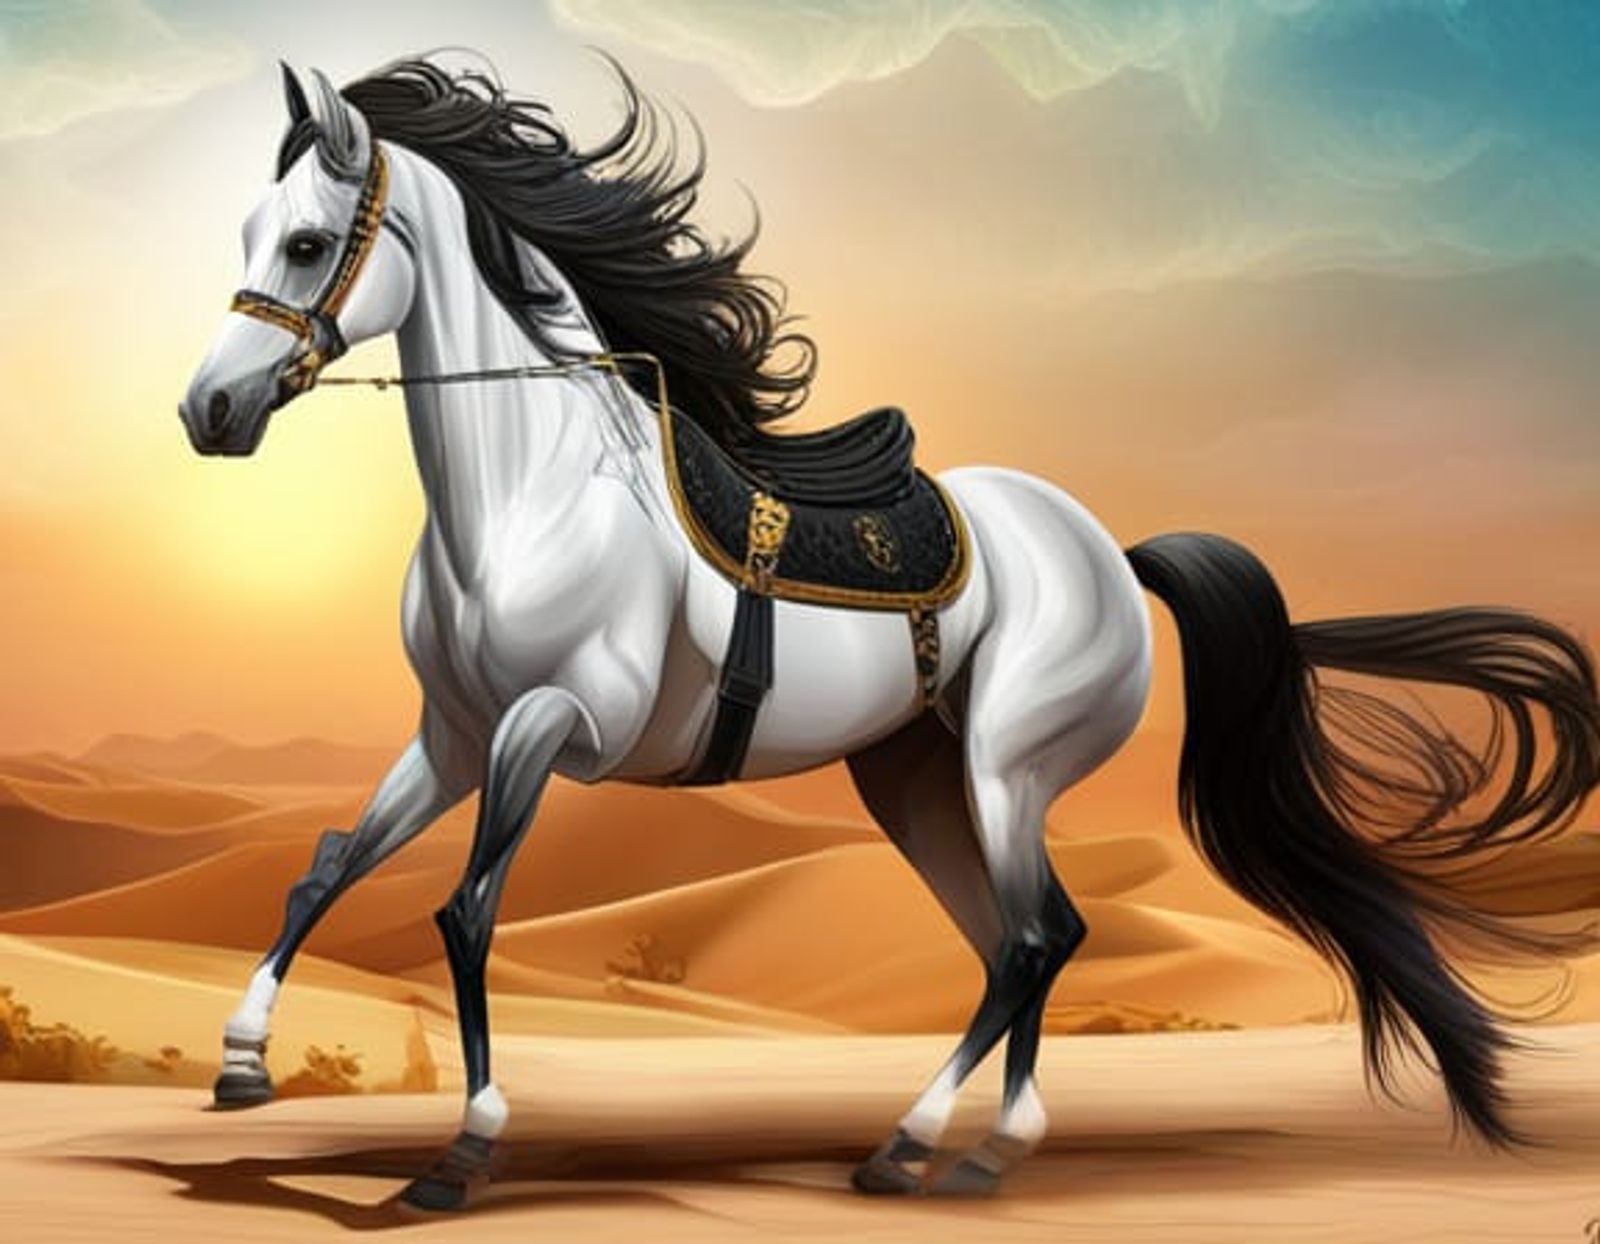 arabian horse wallpapers hd